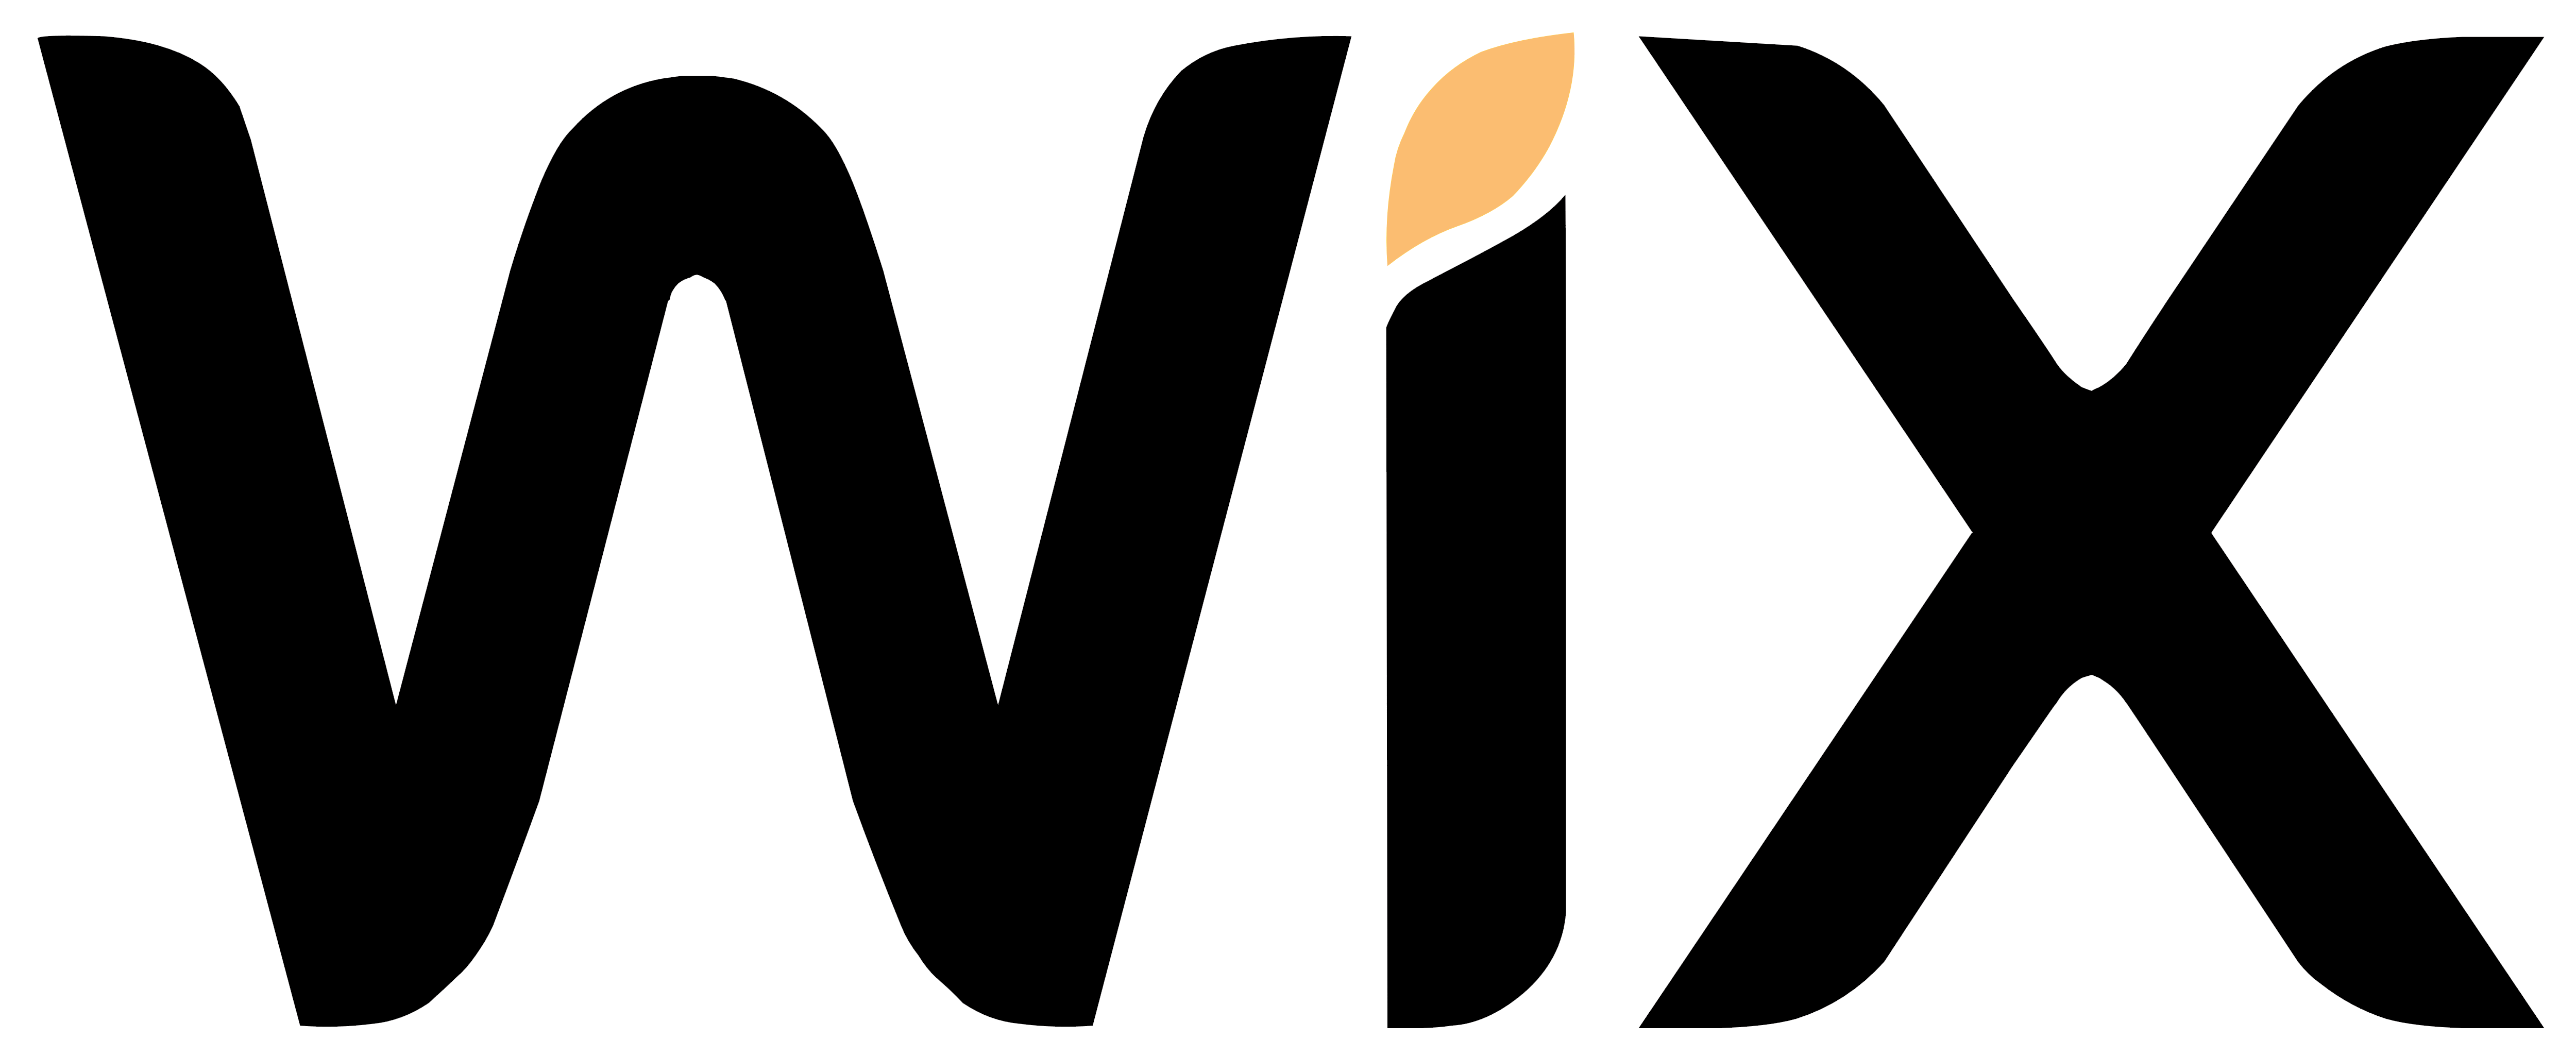 Wix (wix.com) logo, logotype